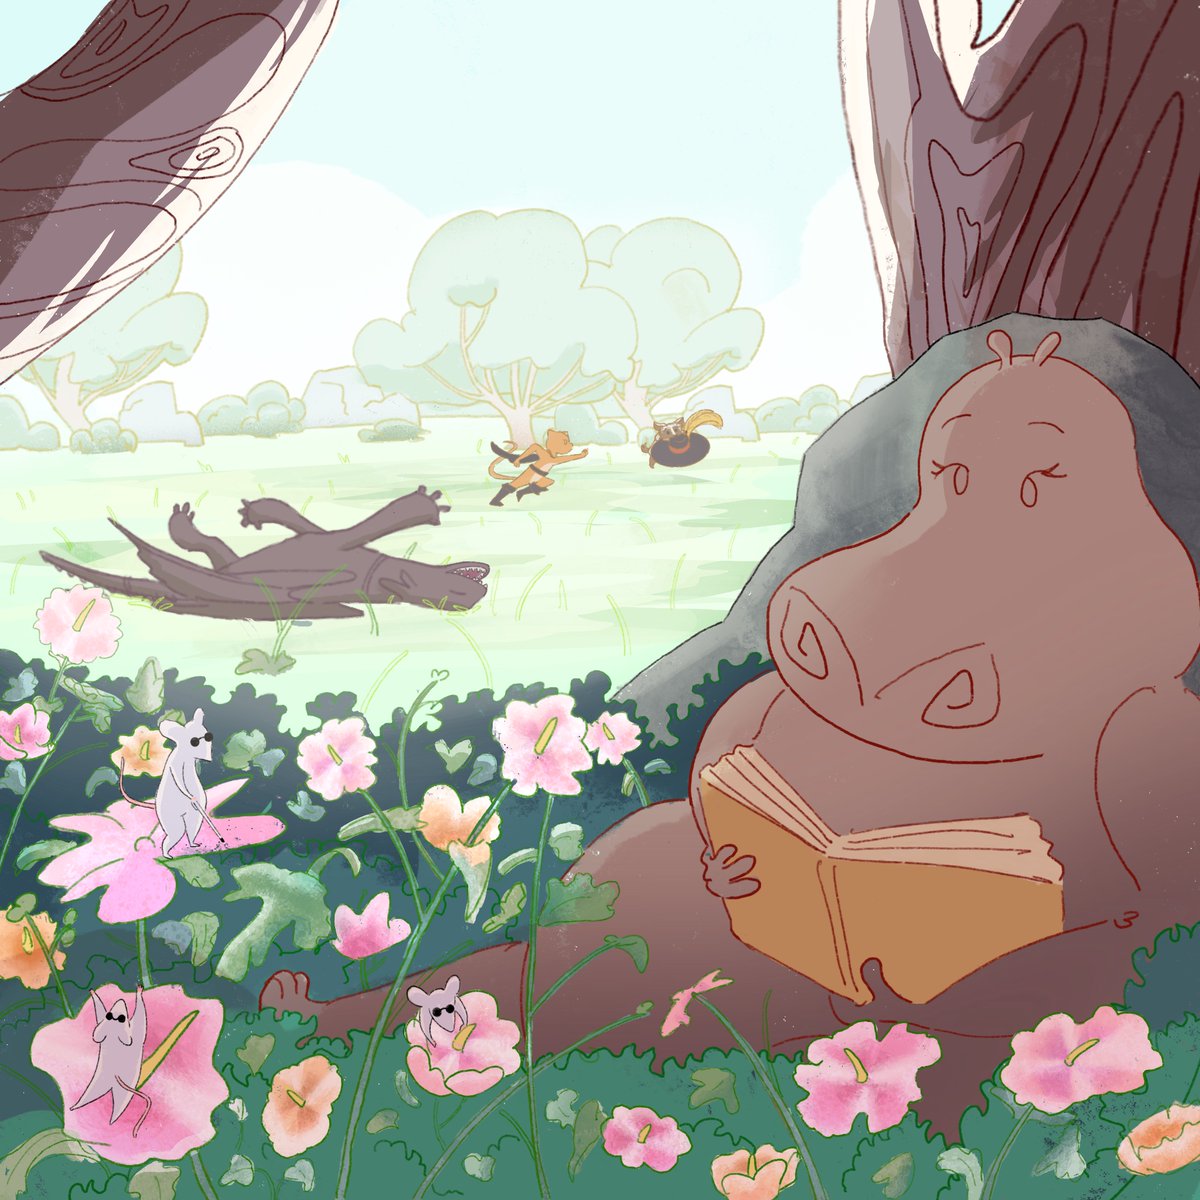 Enjoying a spring day the DreamWorks way 🌷 #DreamWorks